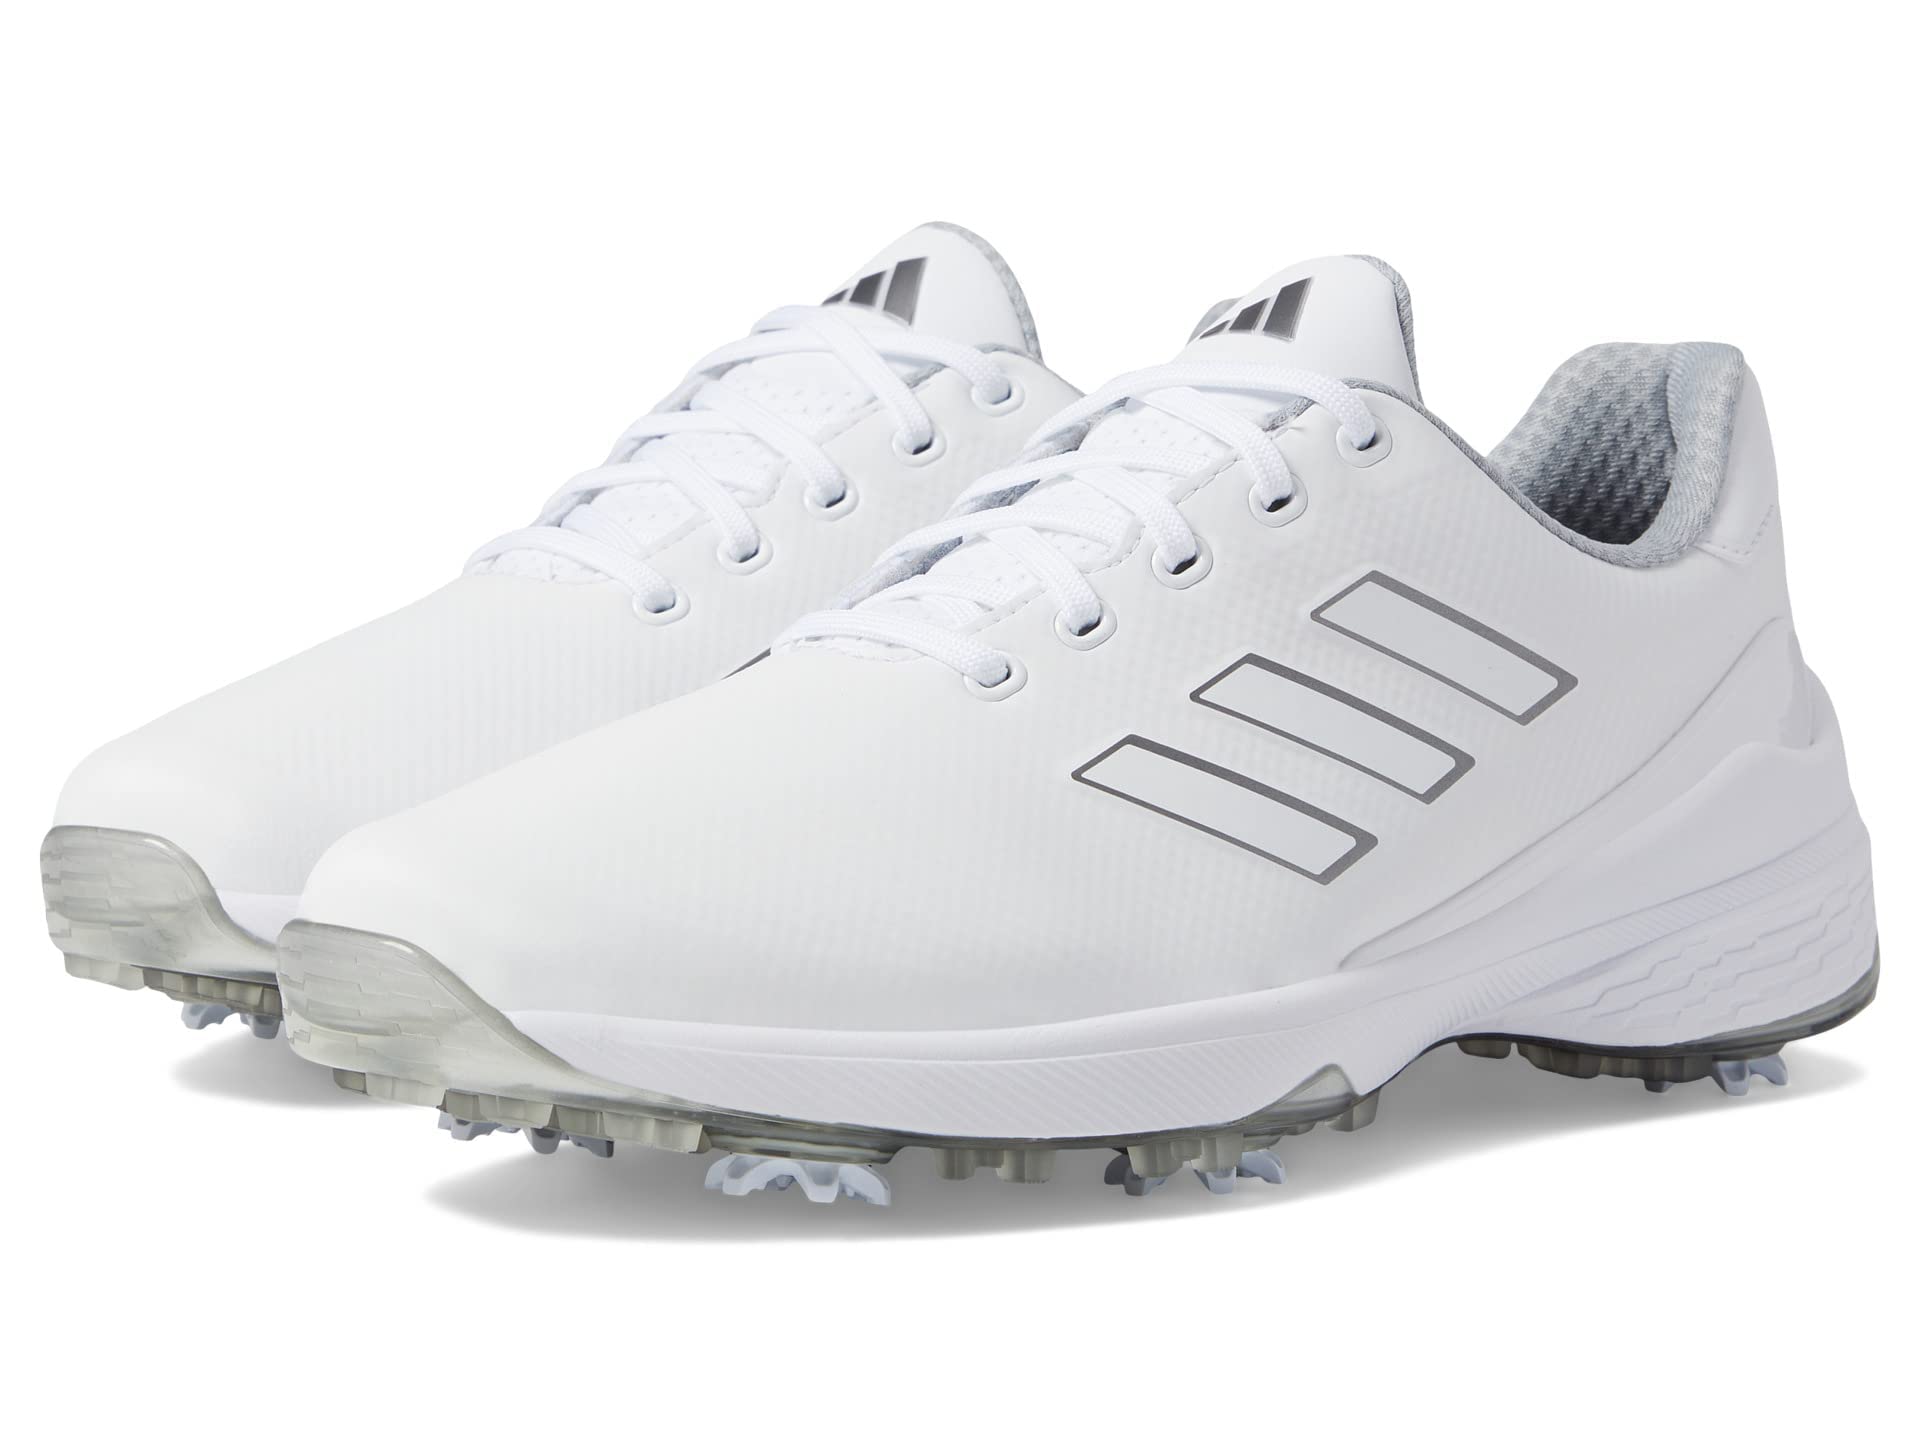 adidas ZG23 Lightstrike Golf Shoes Footwear White/Dark Silver Metallic/Silver Metallic 8.5 E - Wide